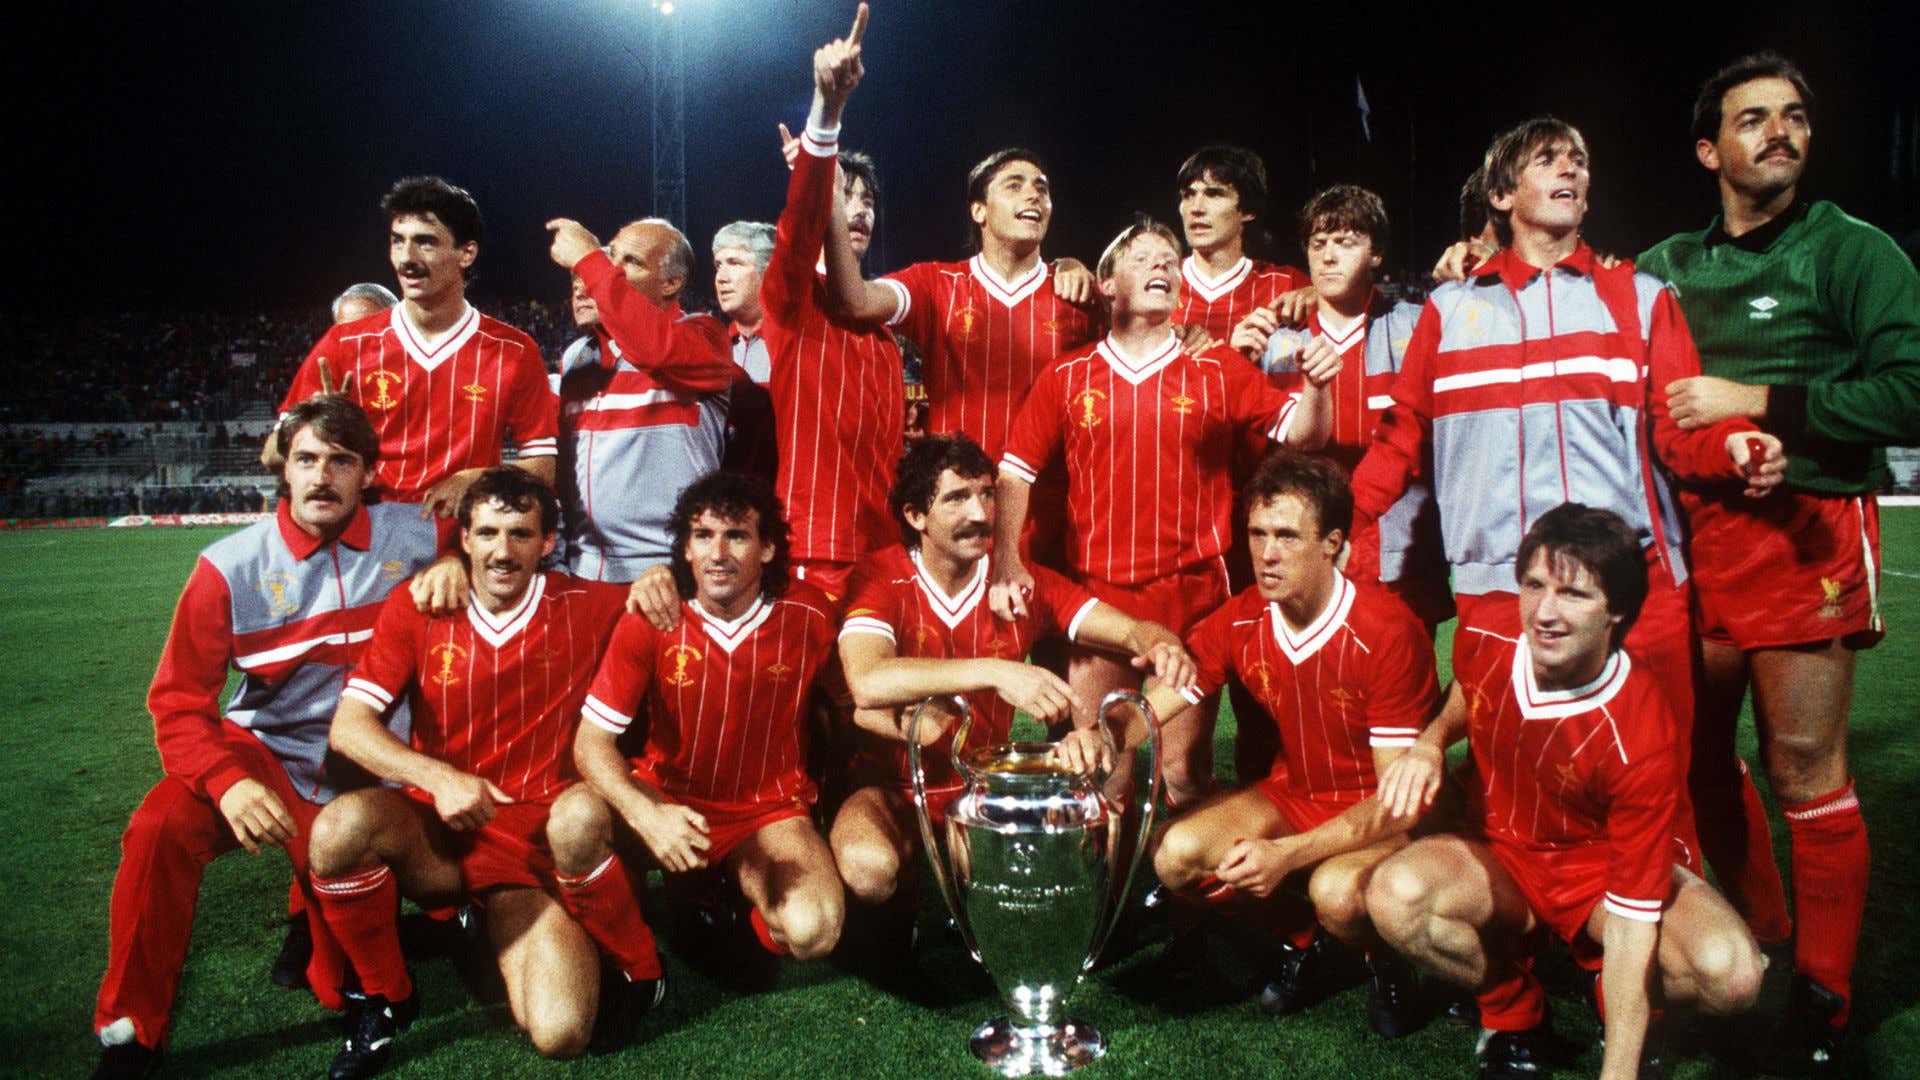 Liverpool's European Cup winning team of 1984